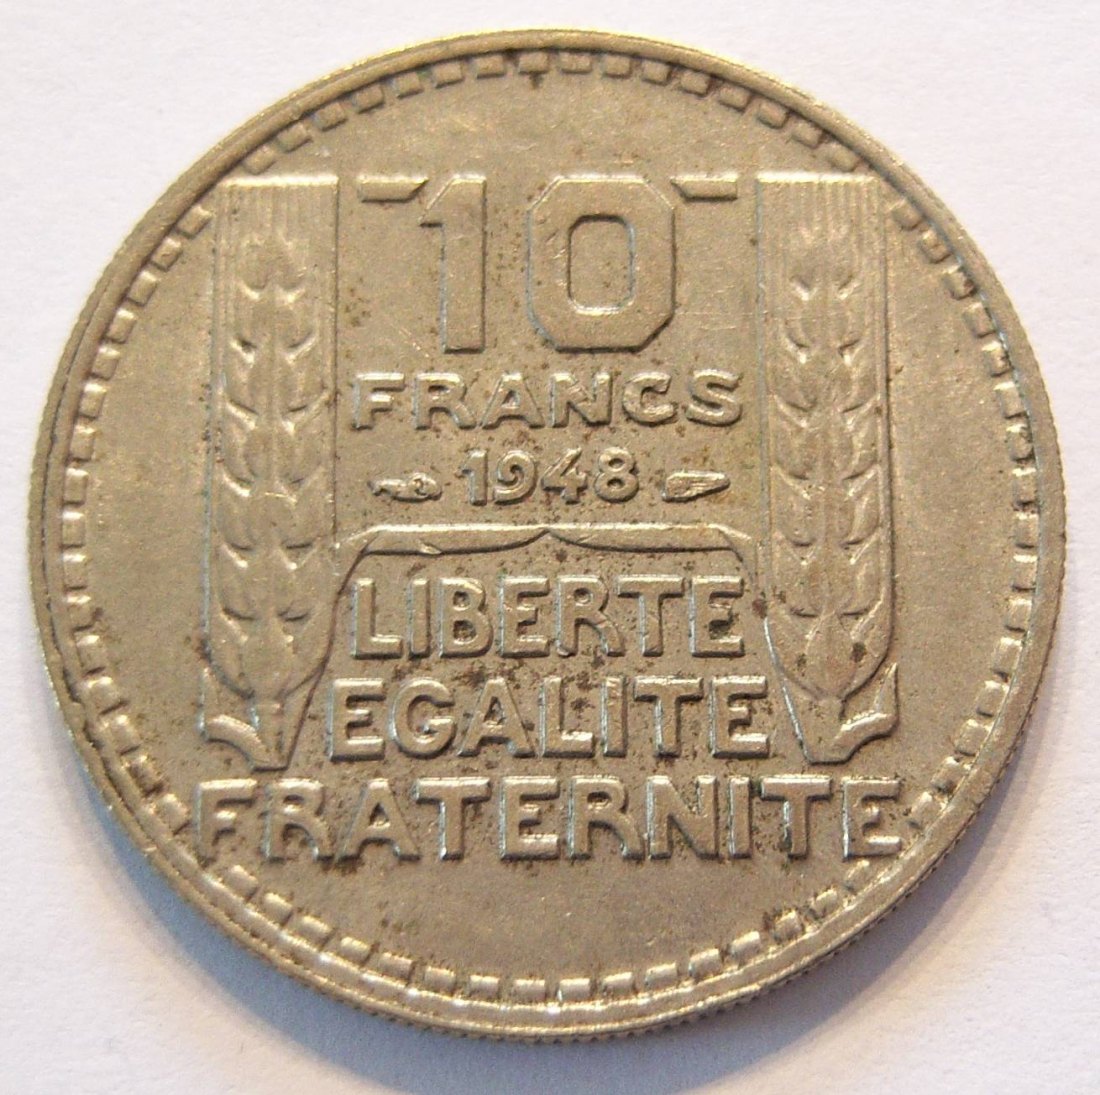  Frankreich 10 Francs 1948   